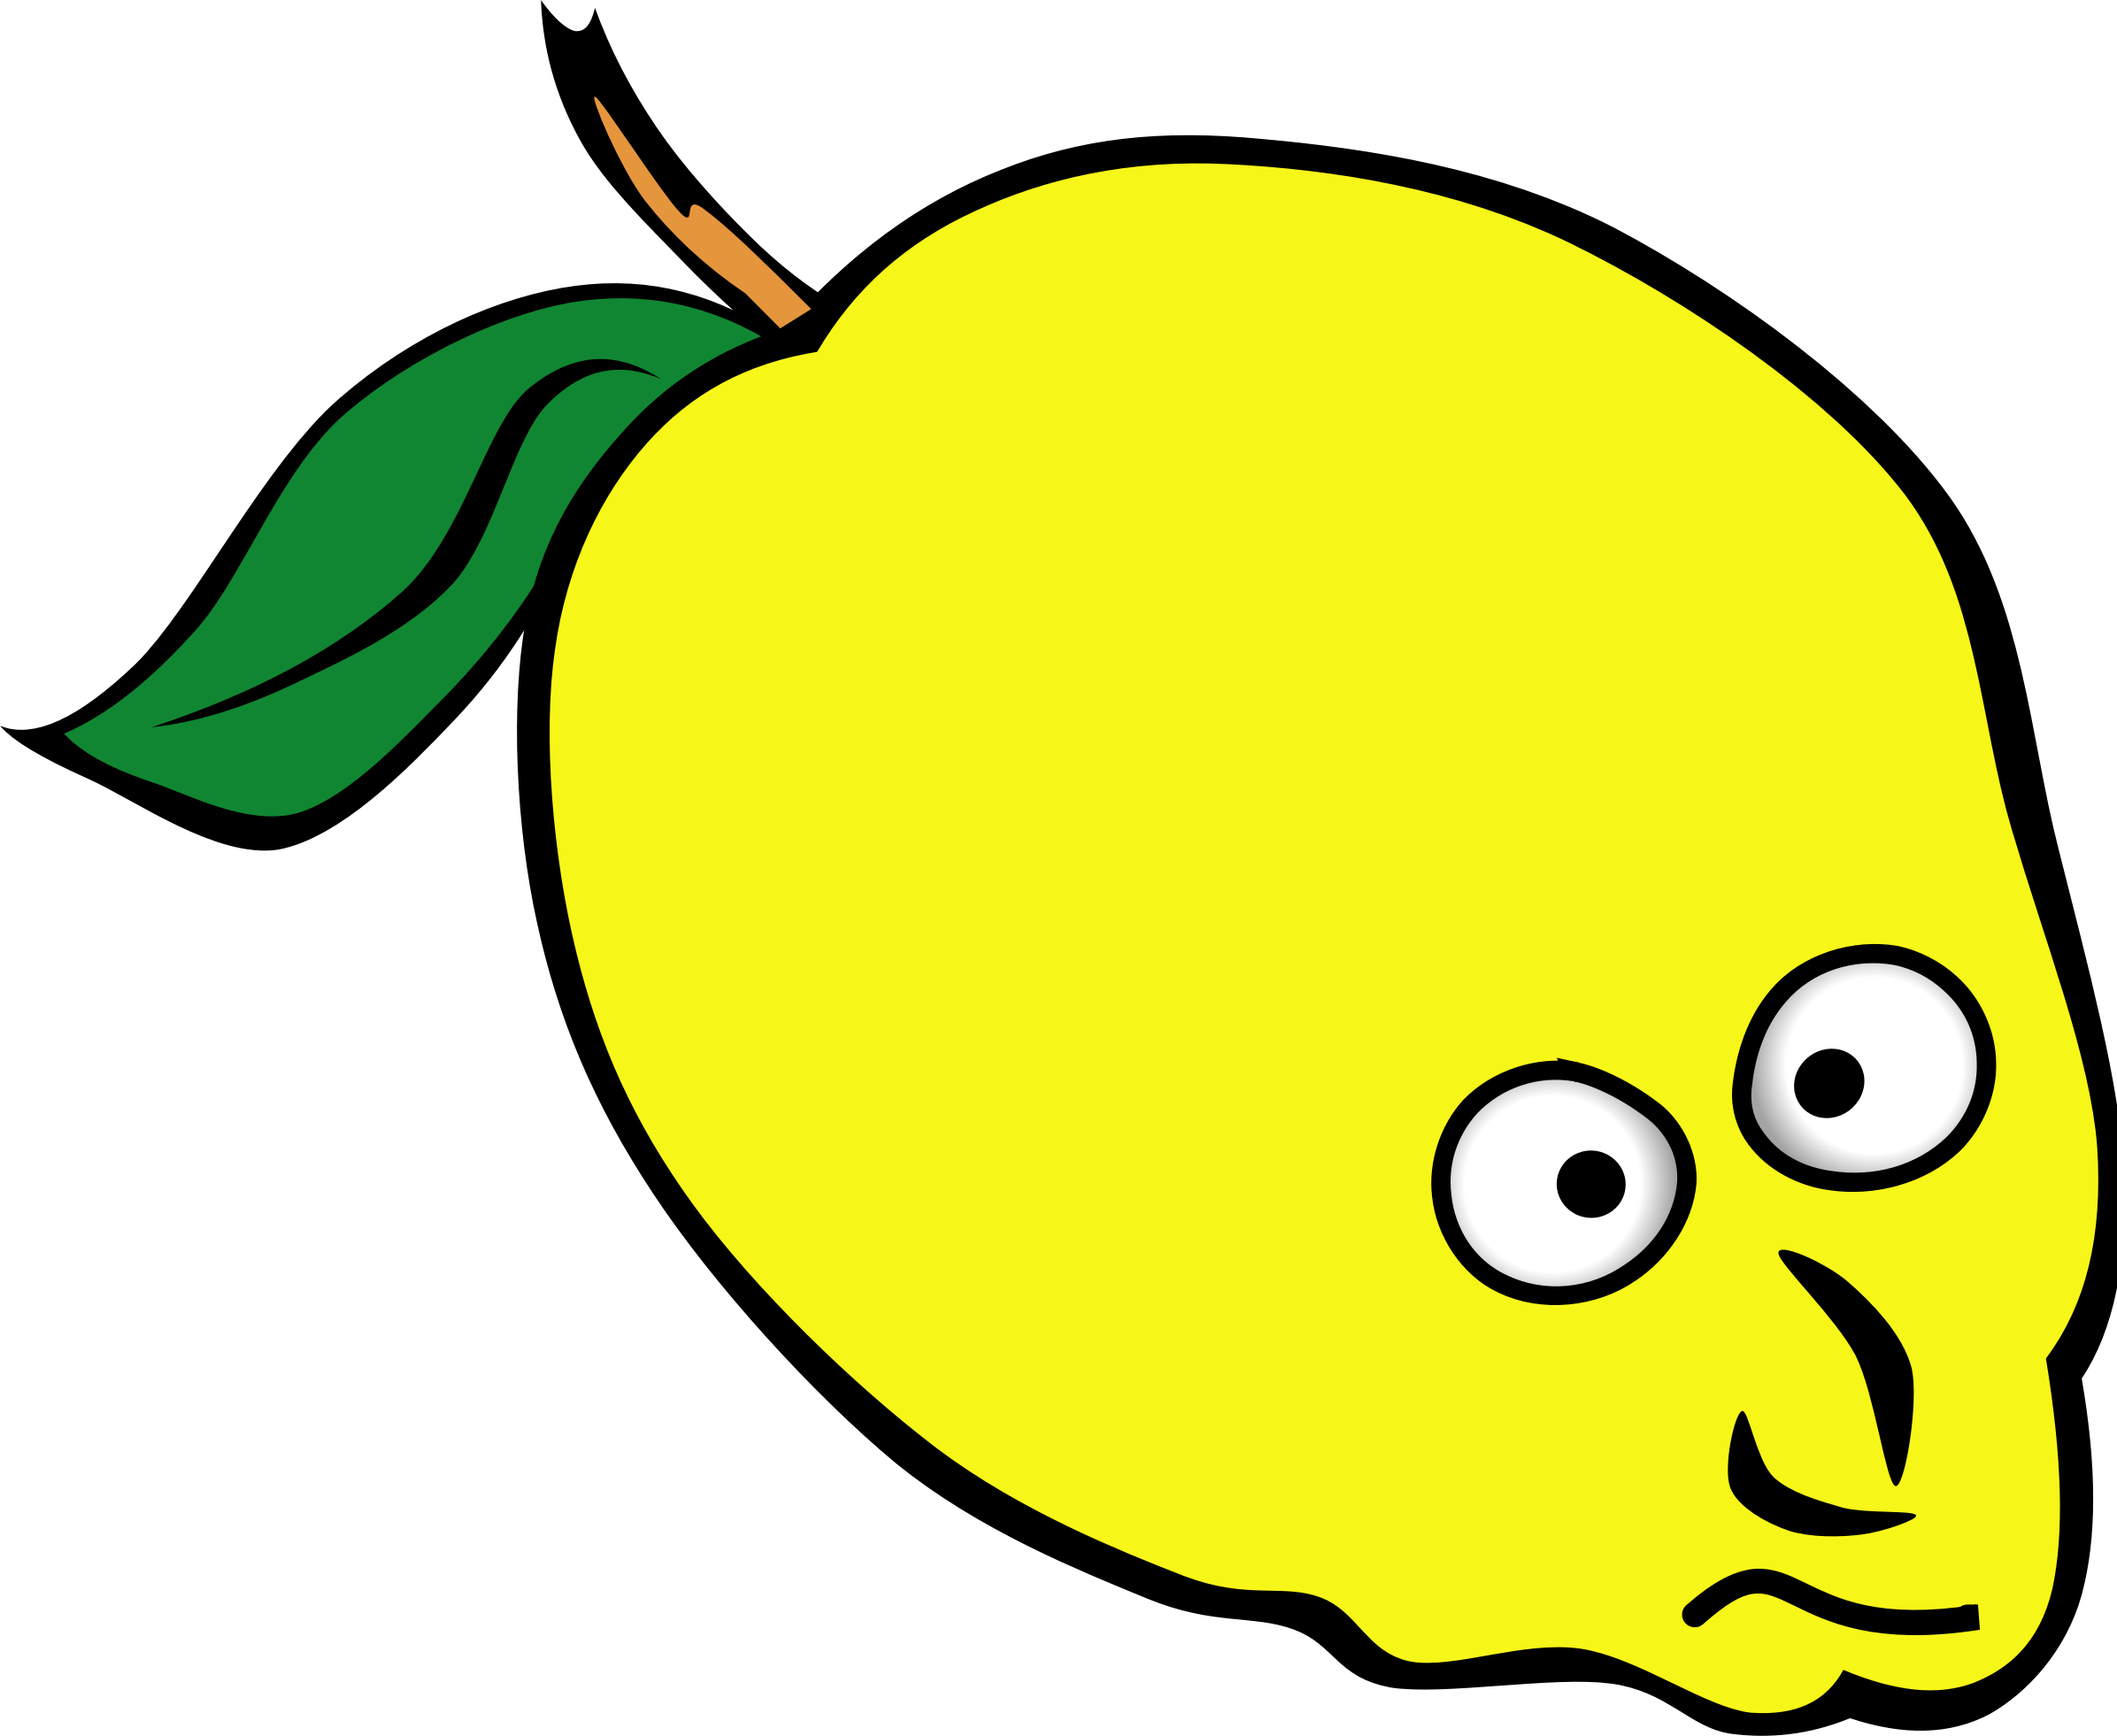 sour lemon cartoon